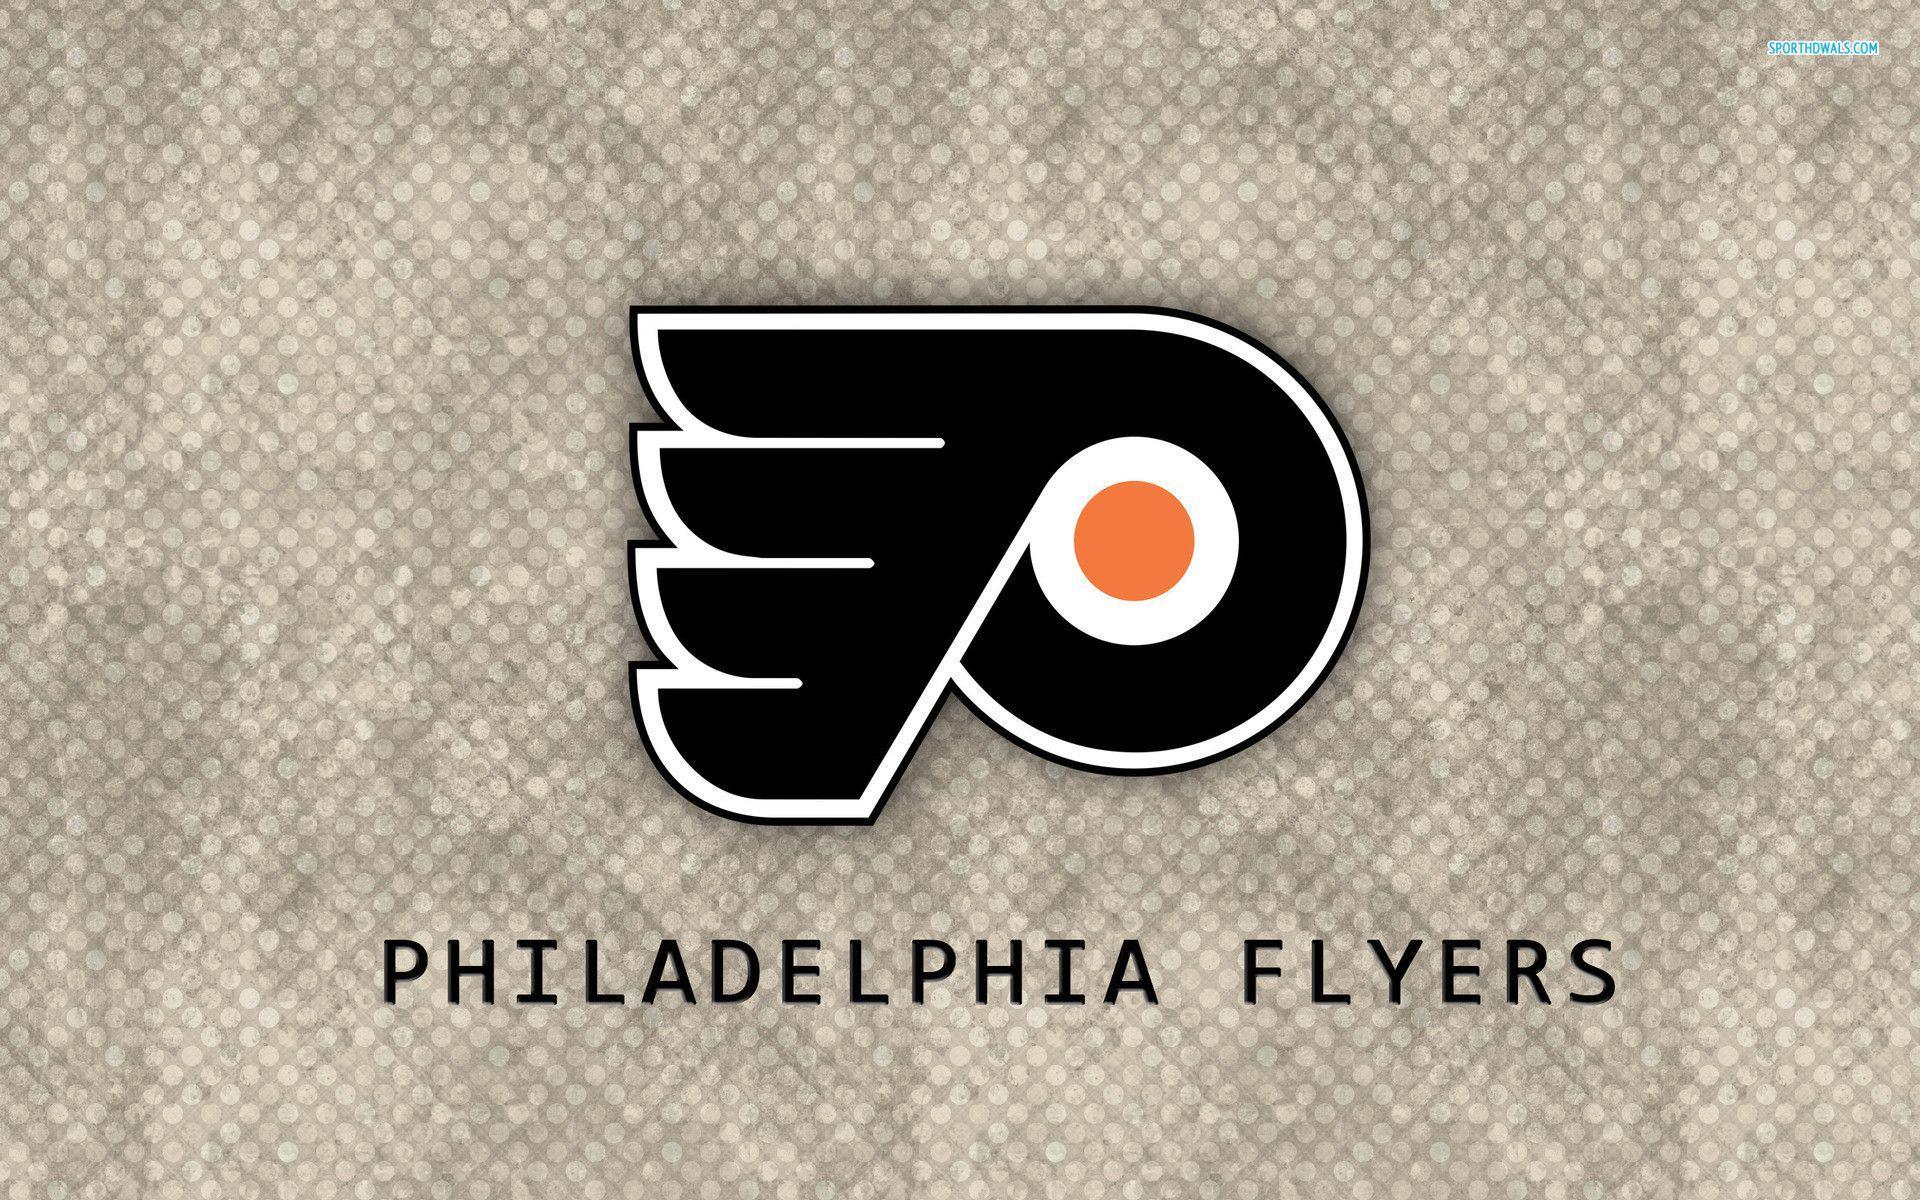 Philadelphia Flyers Wallpaper. Large HD Wallpaper Database